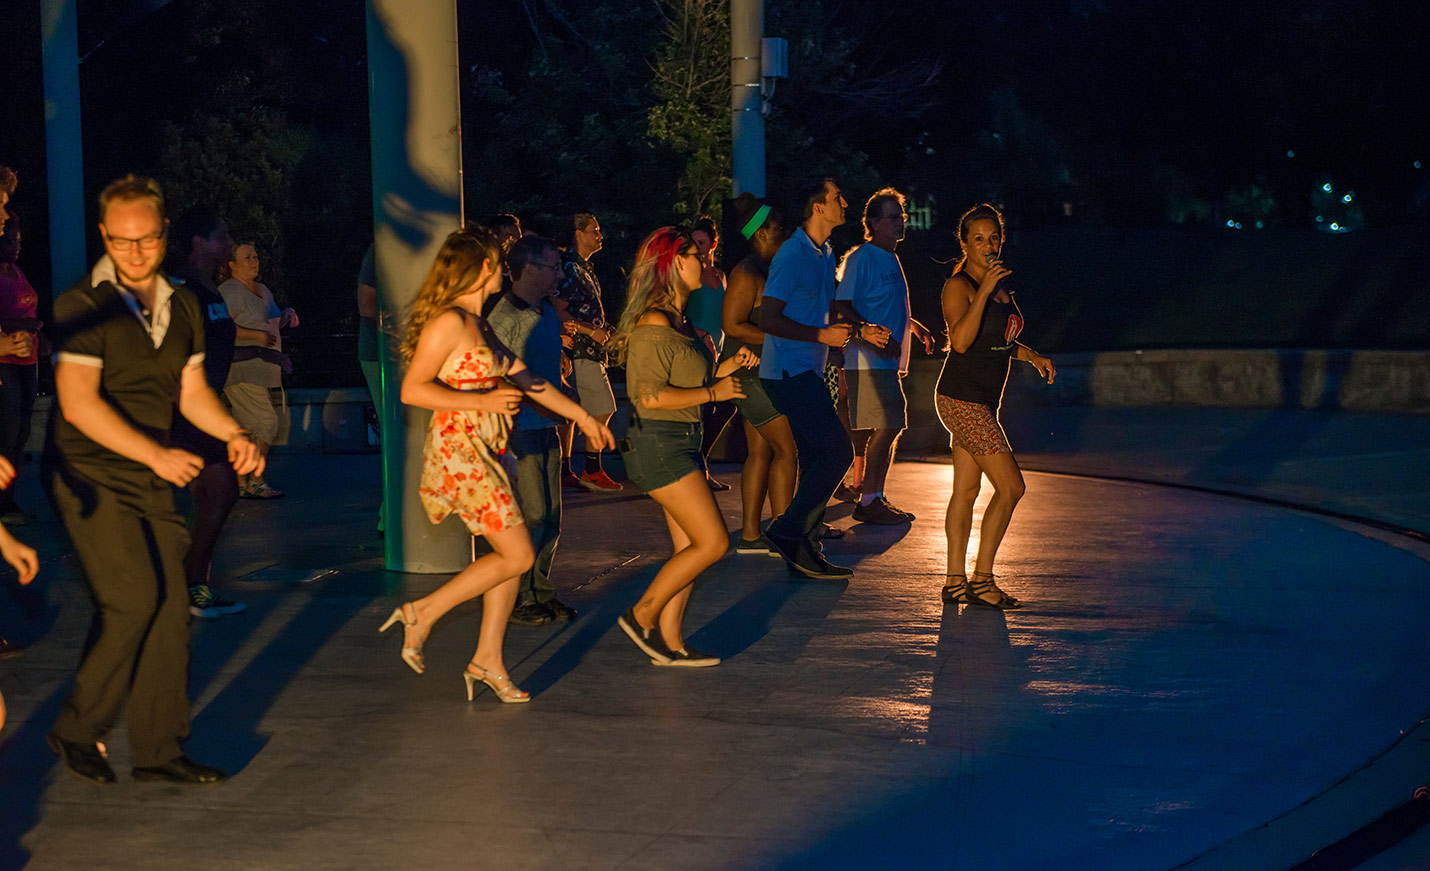 students dancing at night outdoors at a salsa festival